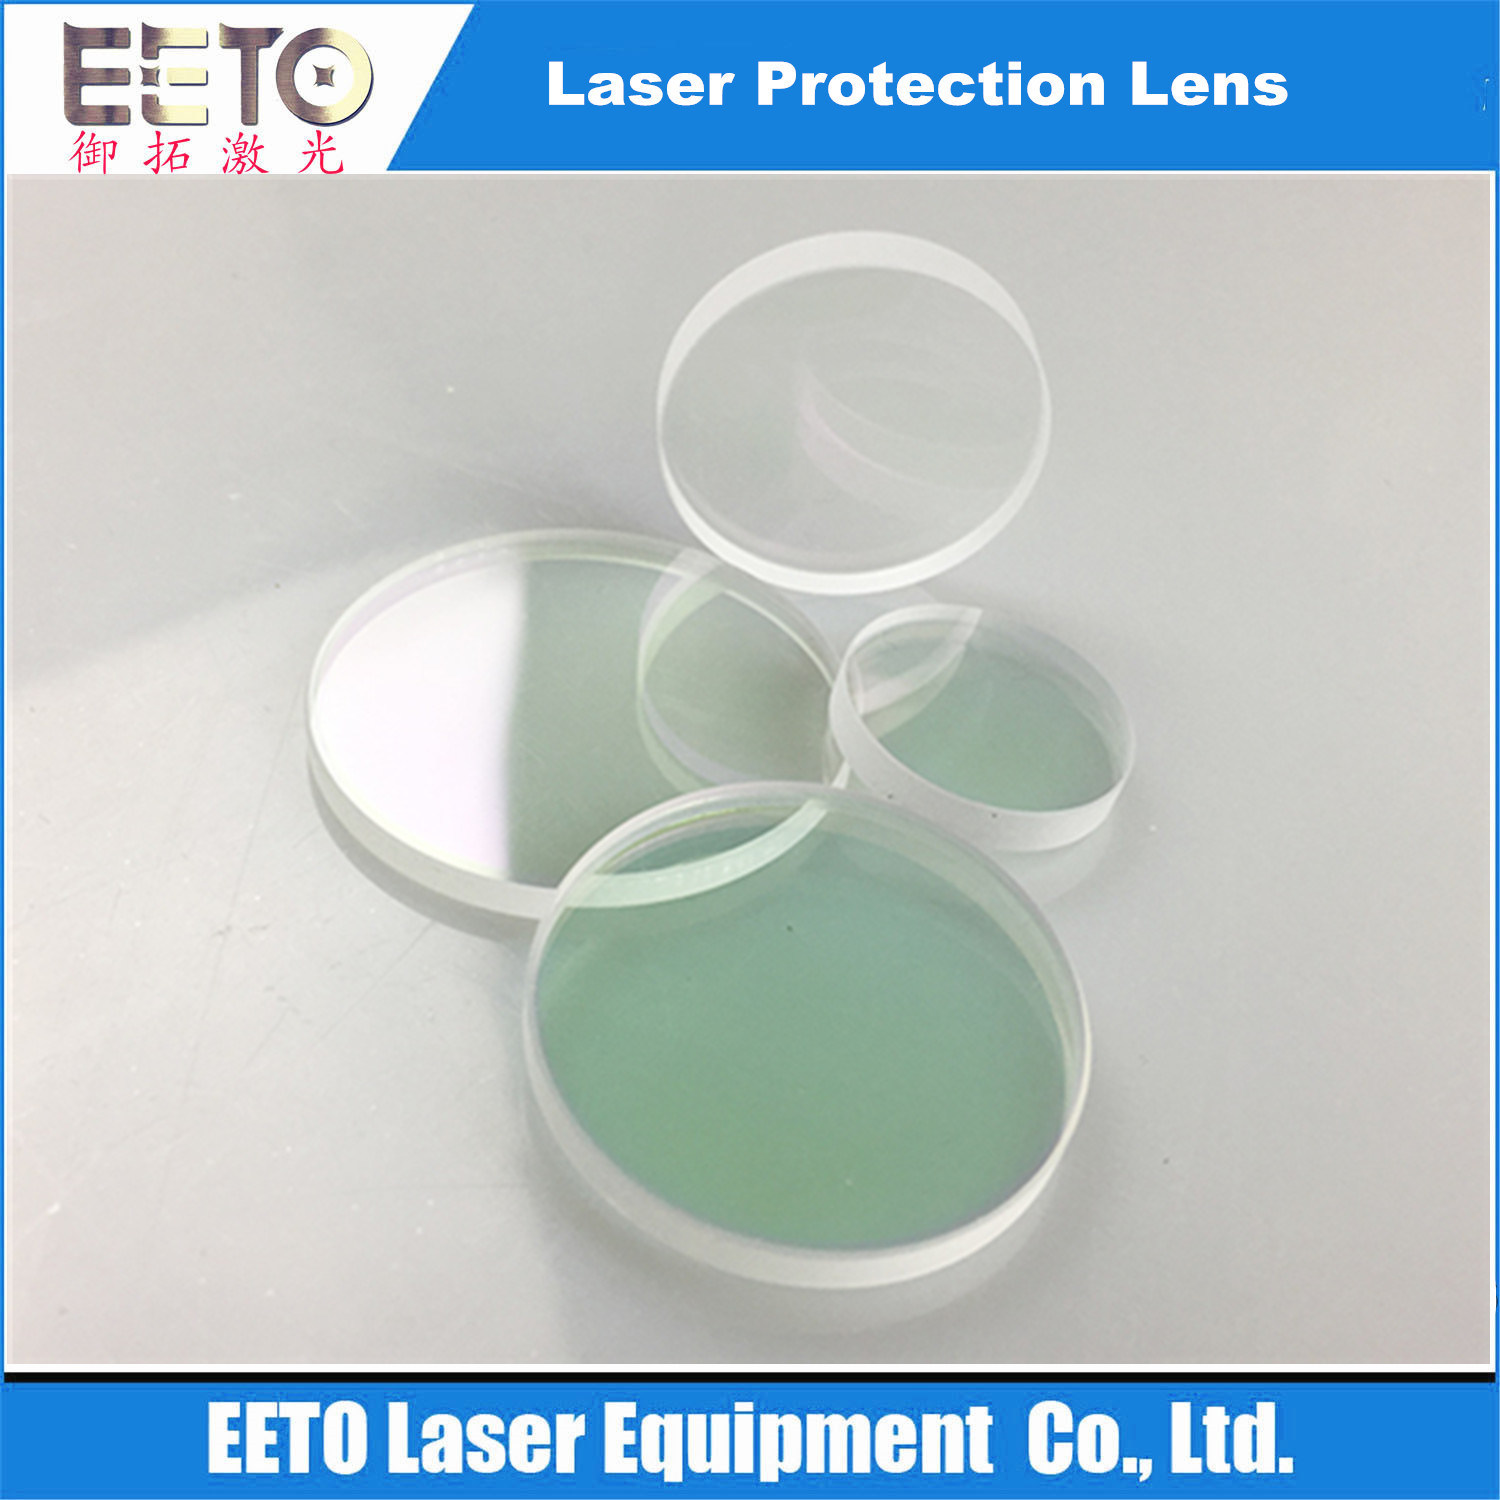 Quartz Glass Protection Mirrors Protective Lens Mirrors for Raytools, Precitec, Lasermech Head